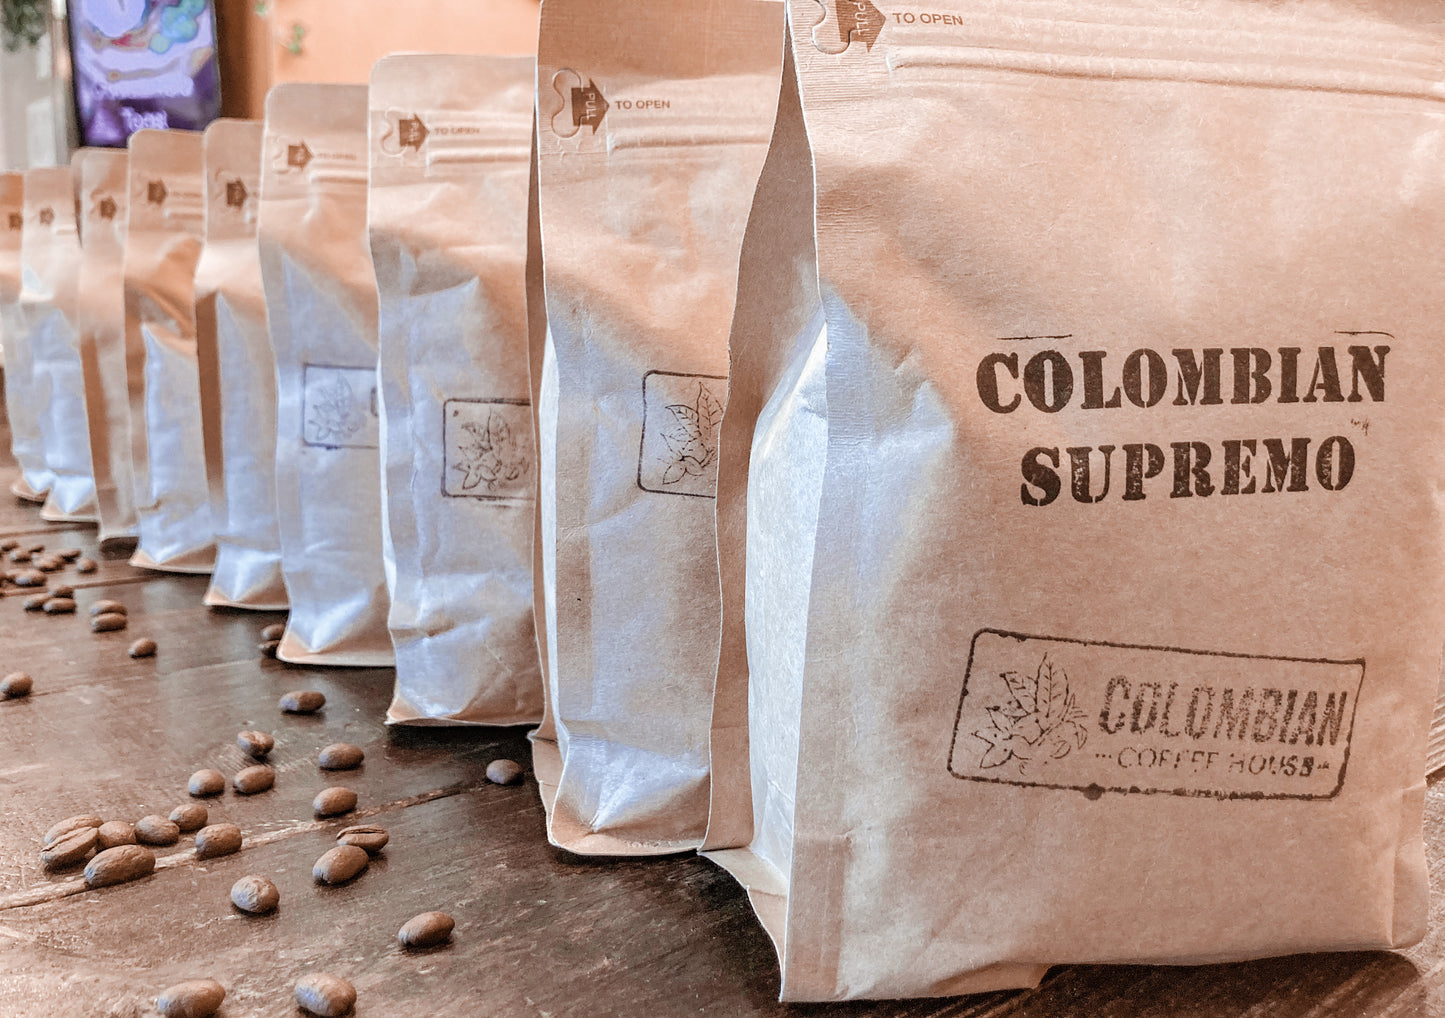 Supremo - Four (4) 12oz Coffee Bags